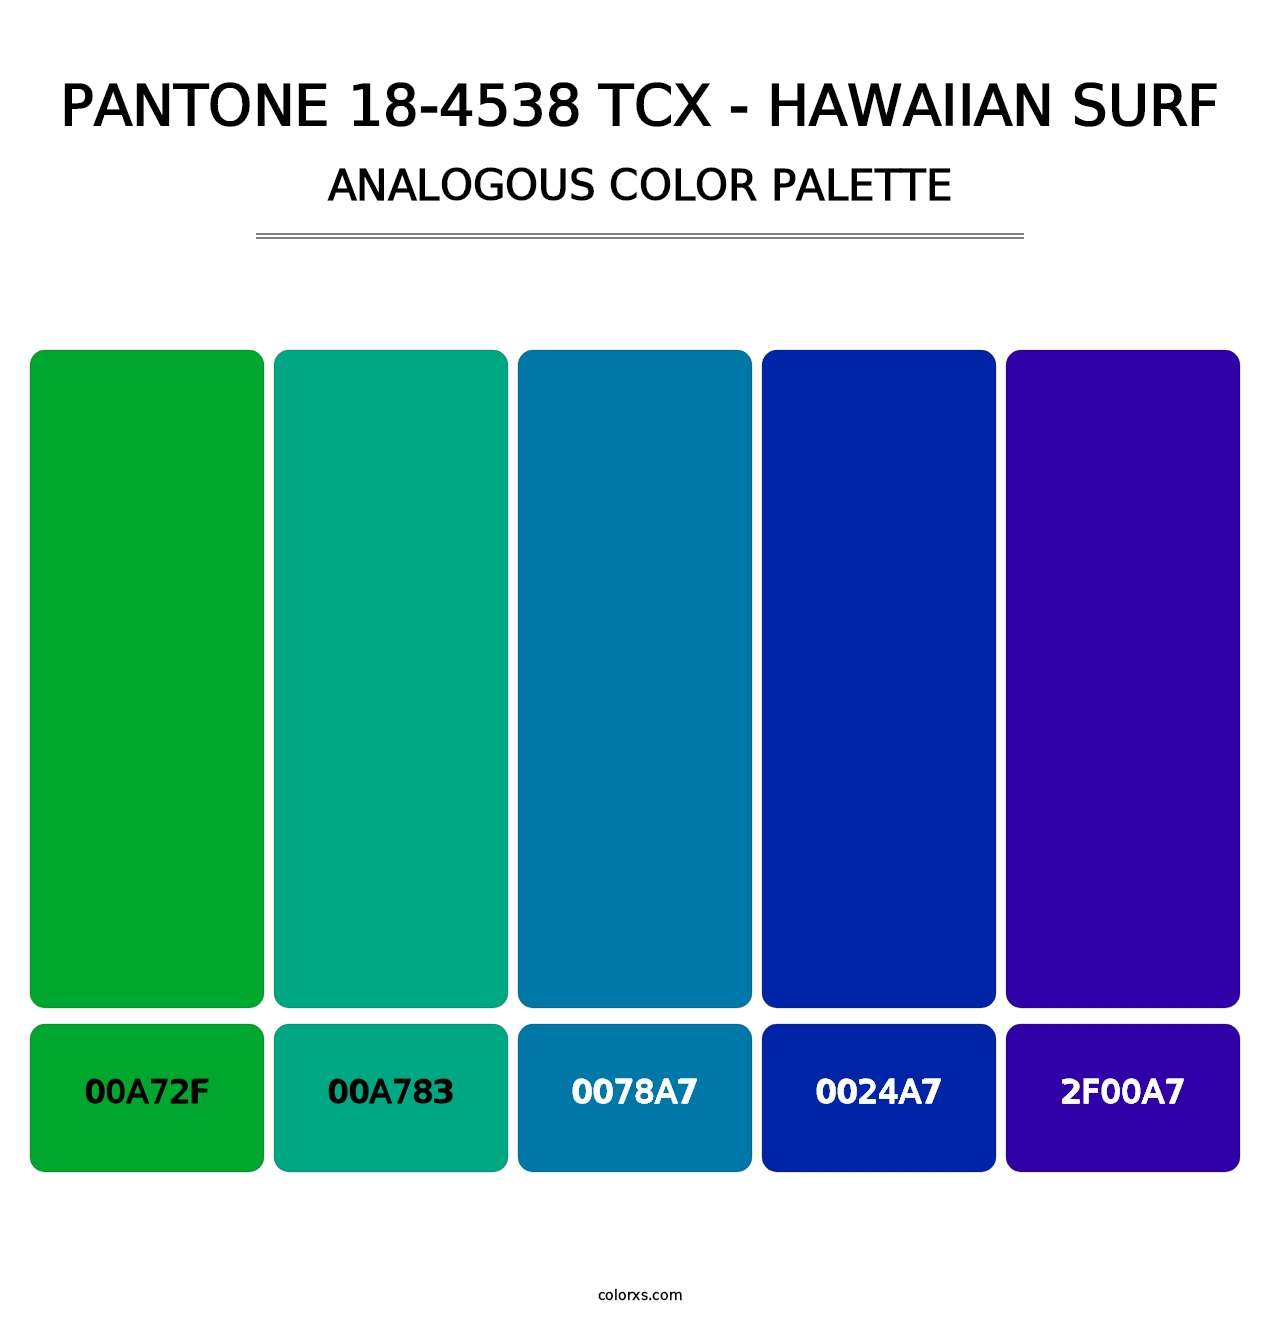 PANTONE 18-4538 TCX - Hawaiian Surf - Analogous Color Palette